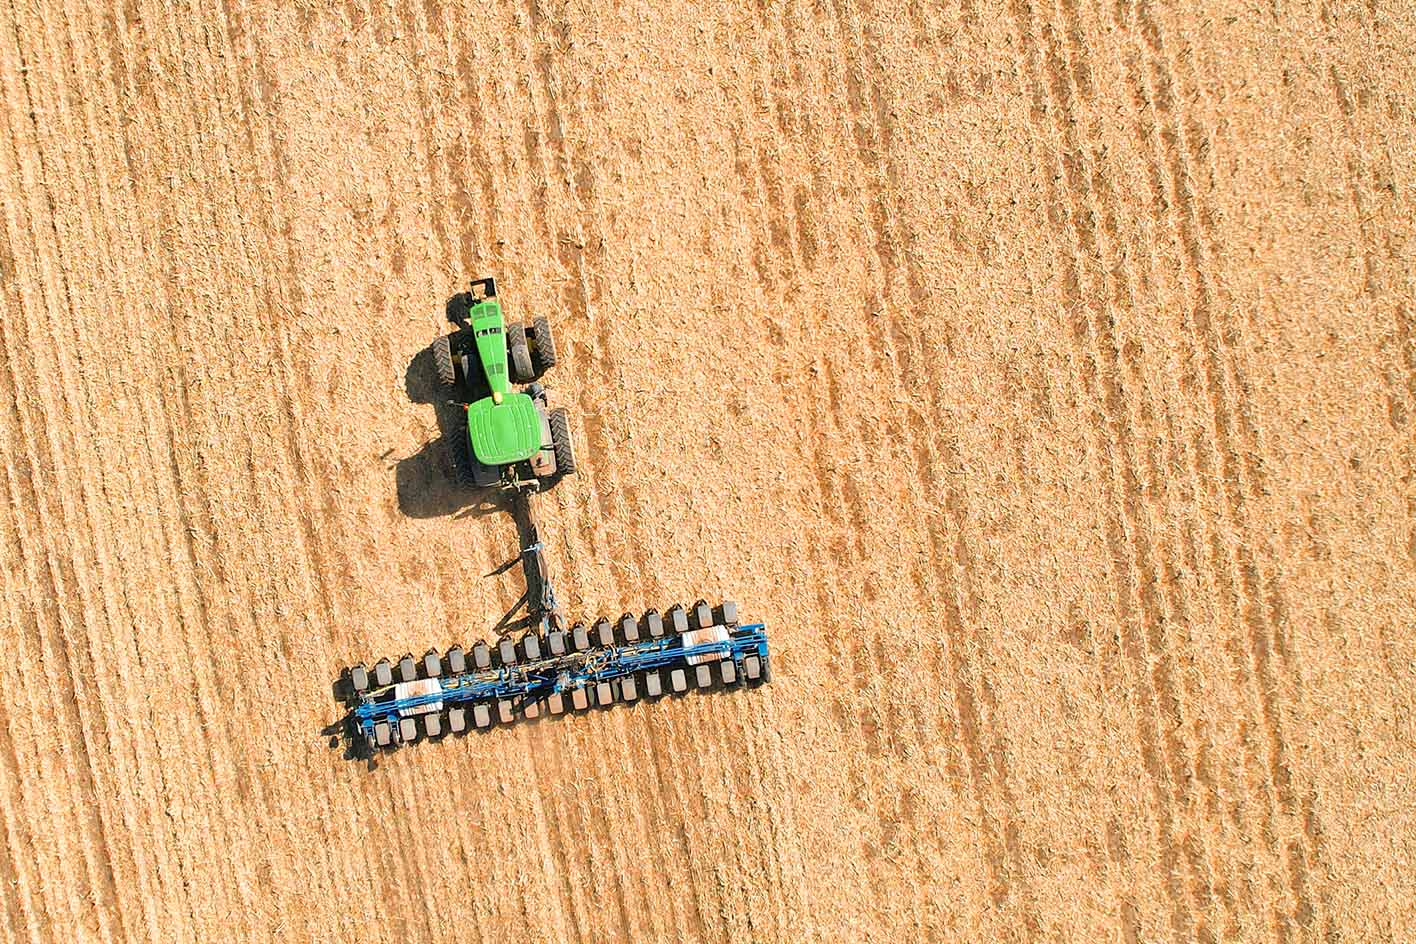 John Deere tractor planting soybeans in Iowa